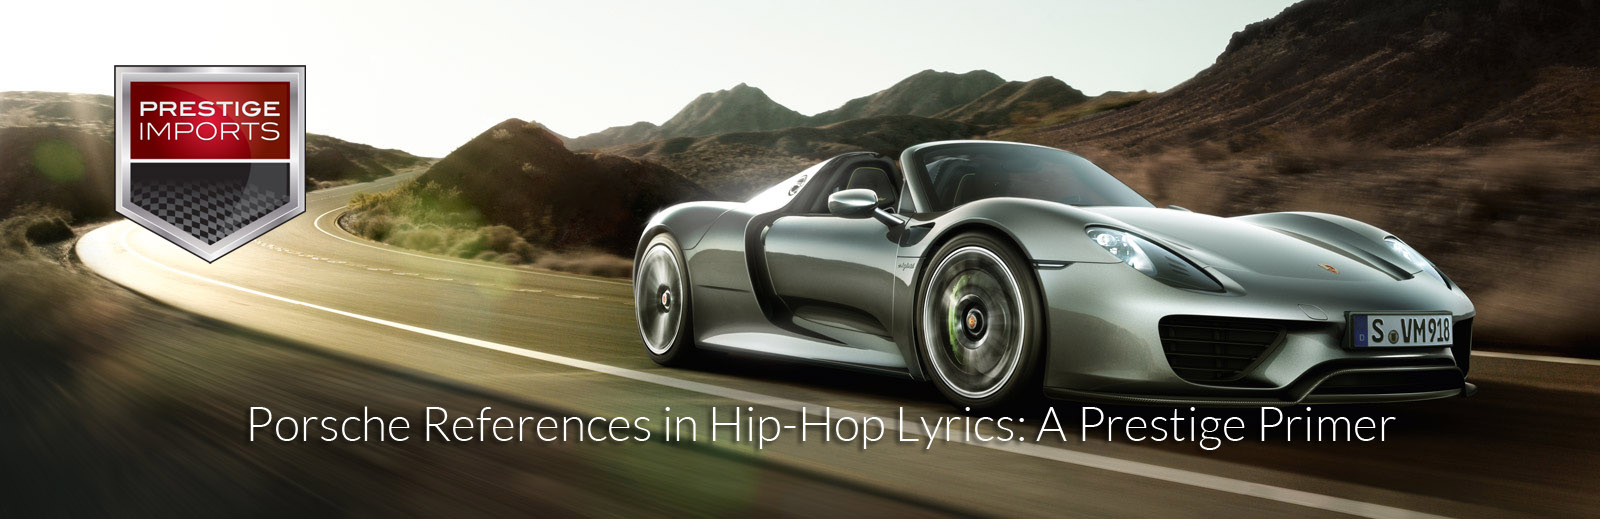 Porsche Lyrics in Hip-Hop Songs